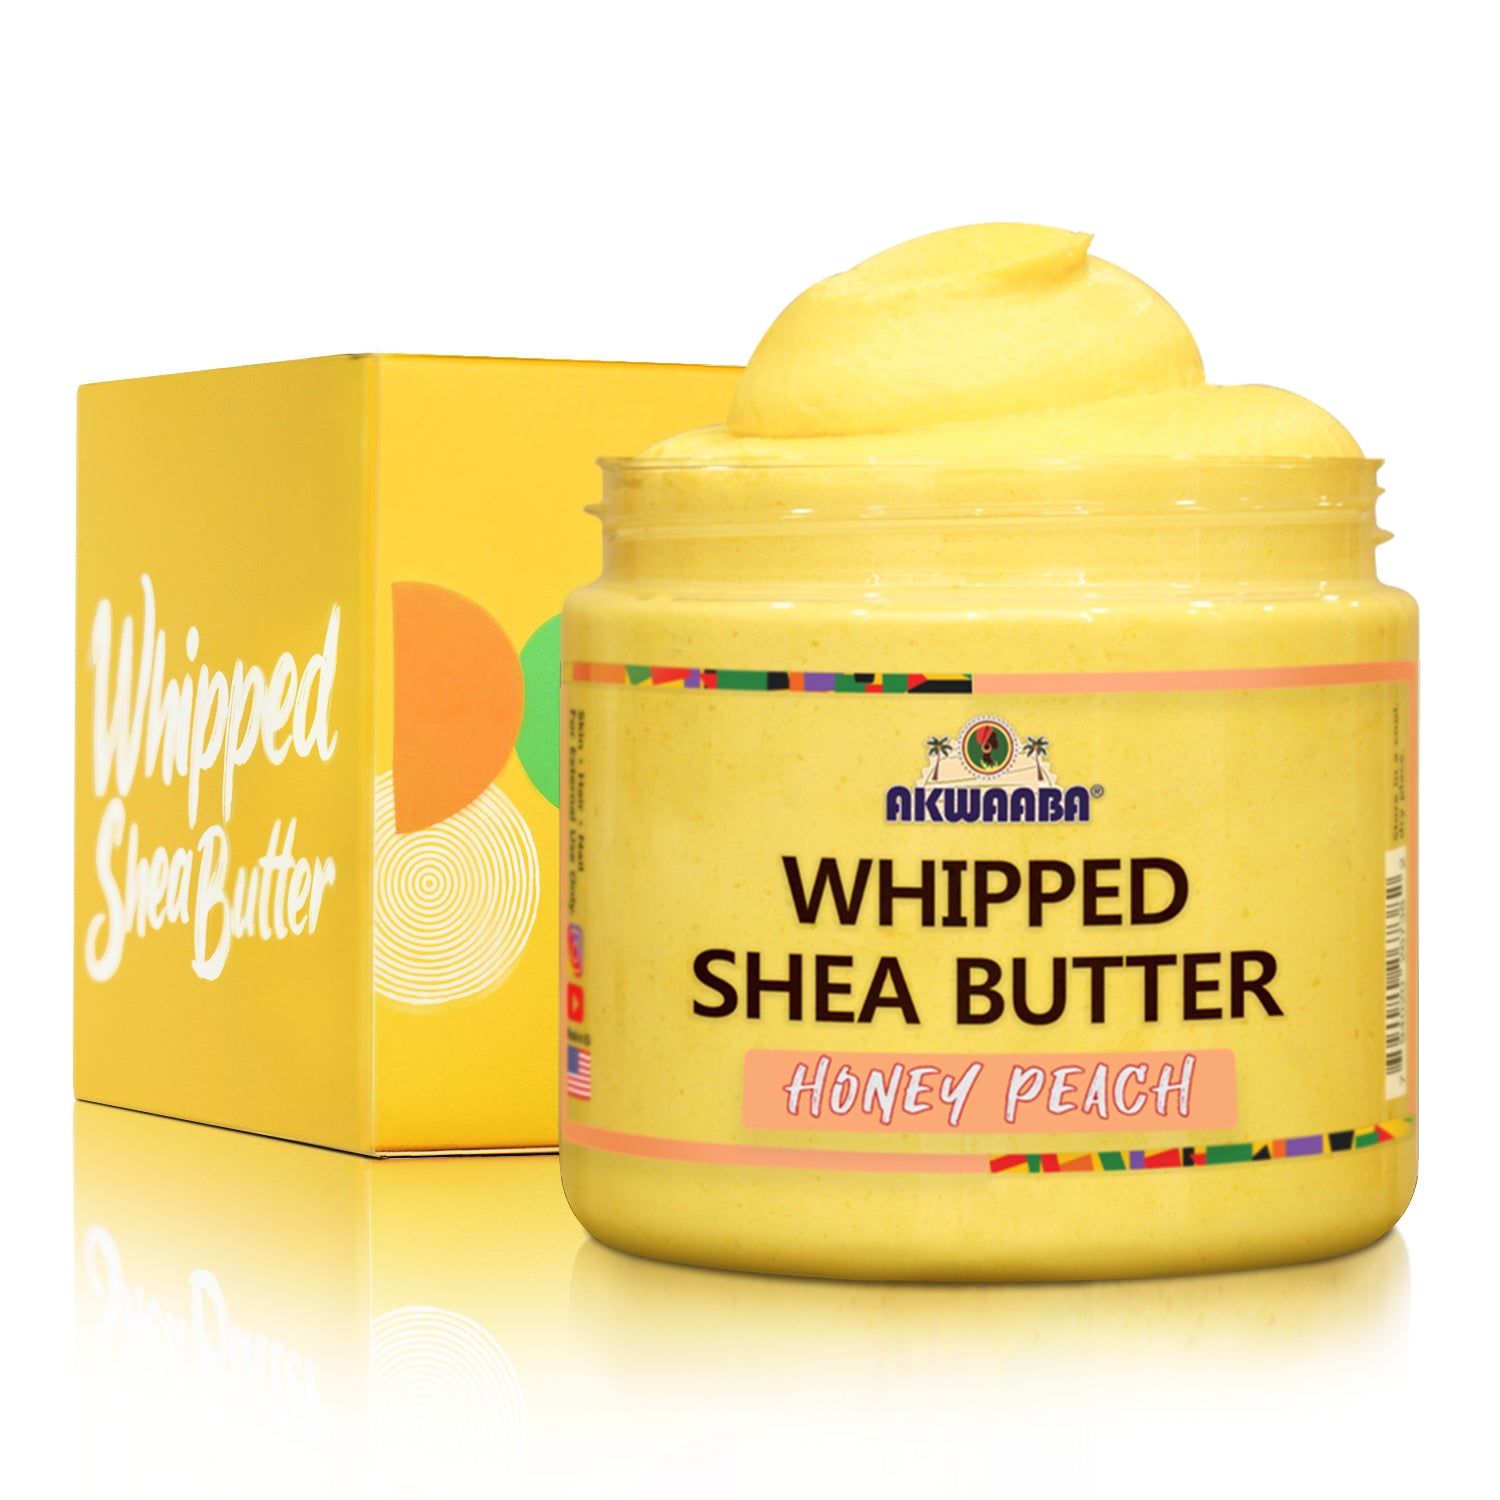 AKWAABA Whipped Shea Butter(Honey Peach) 12oz